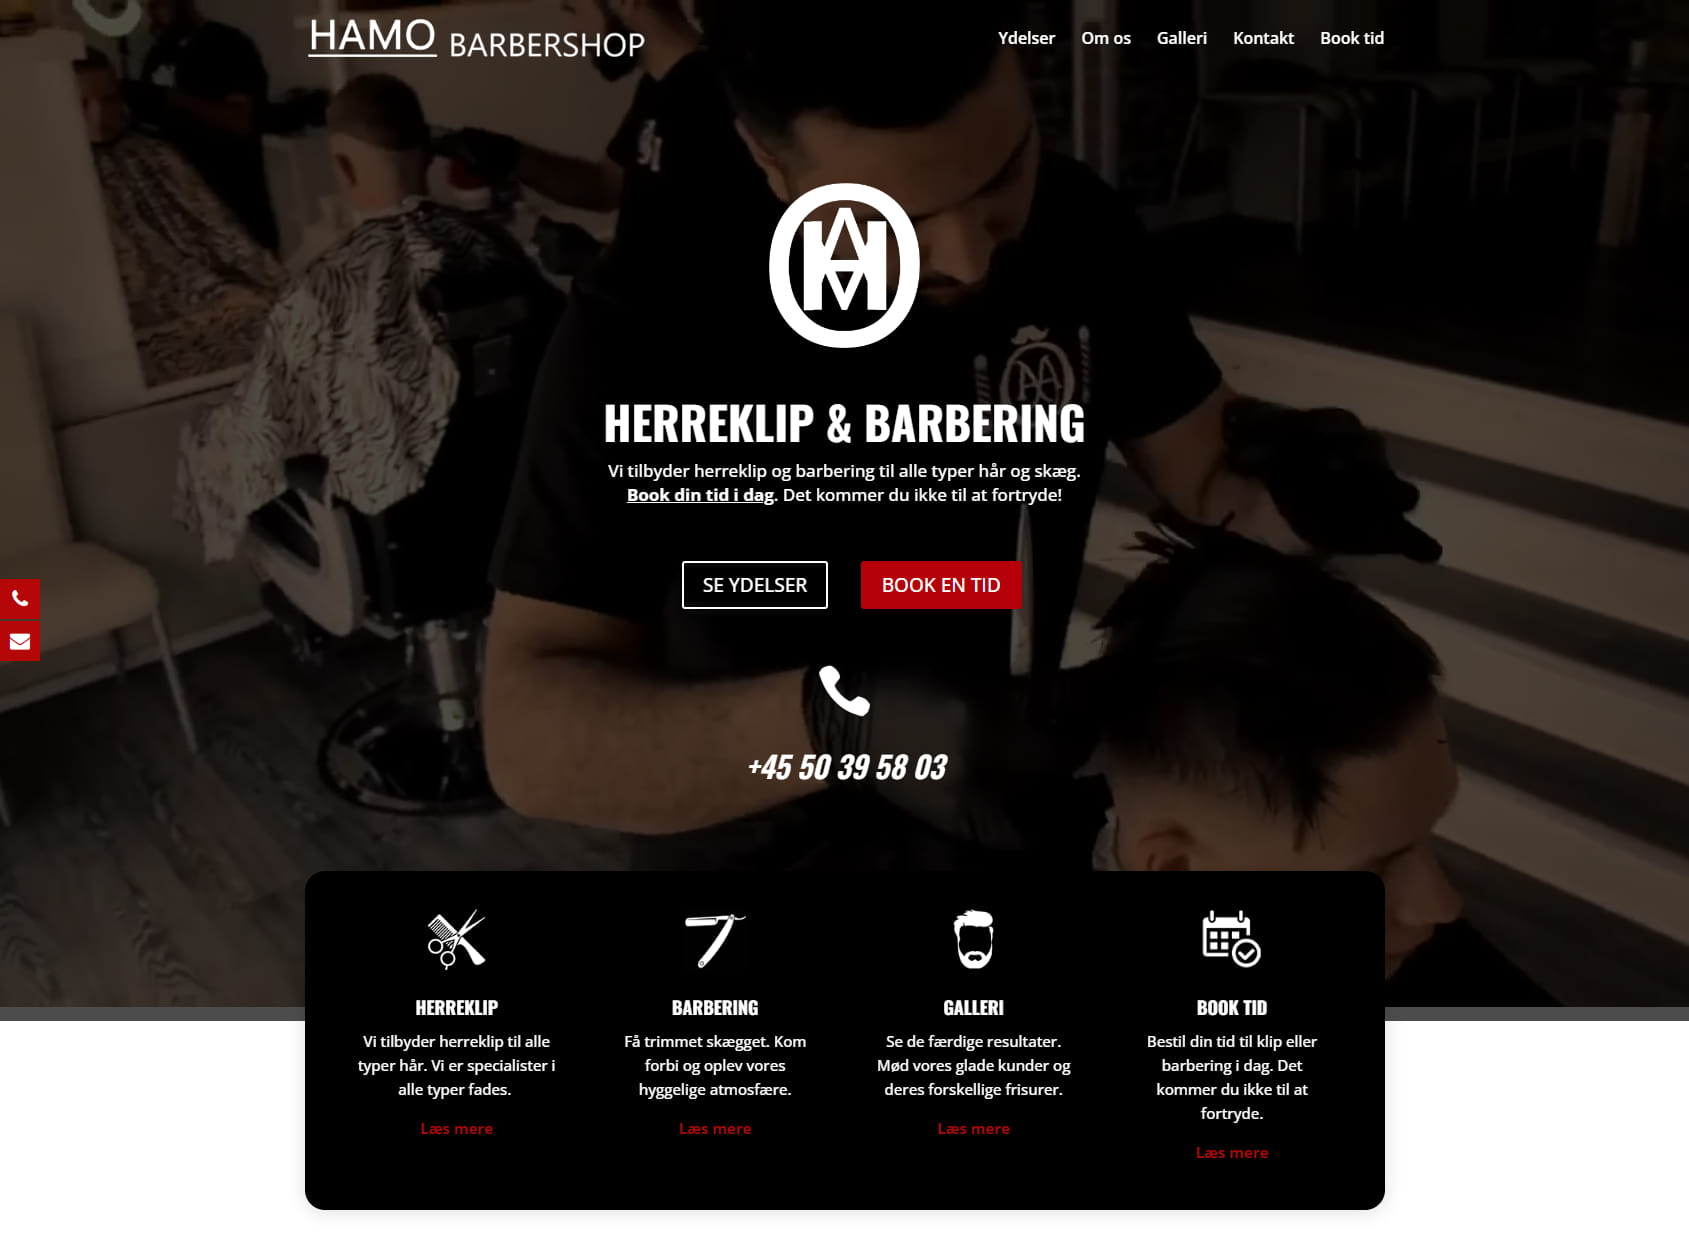 Hamo barbershop